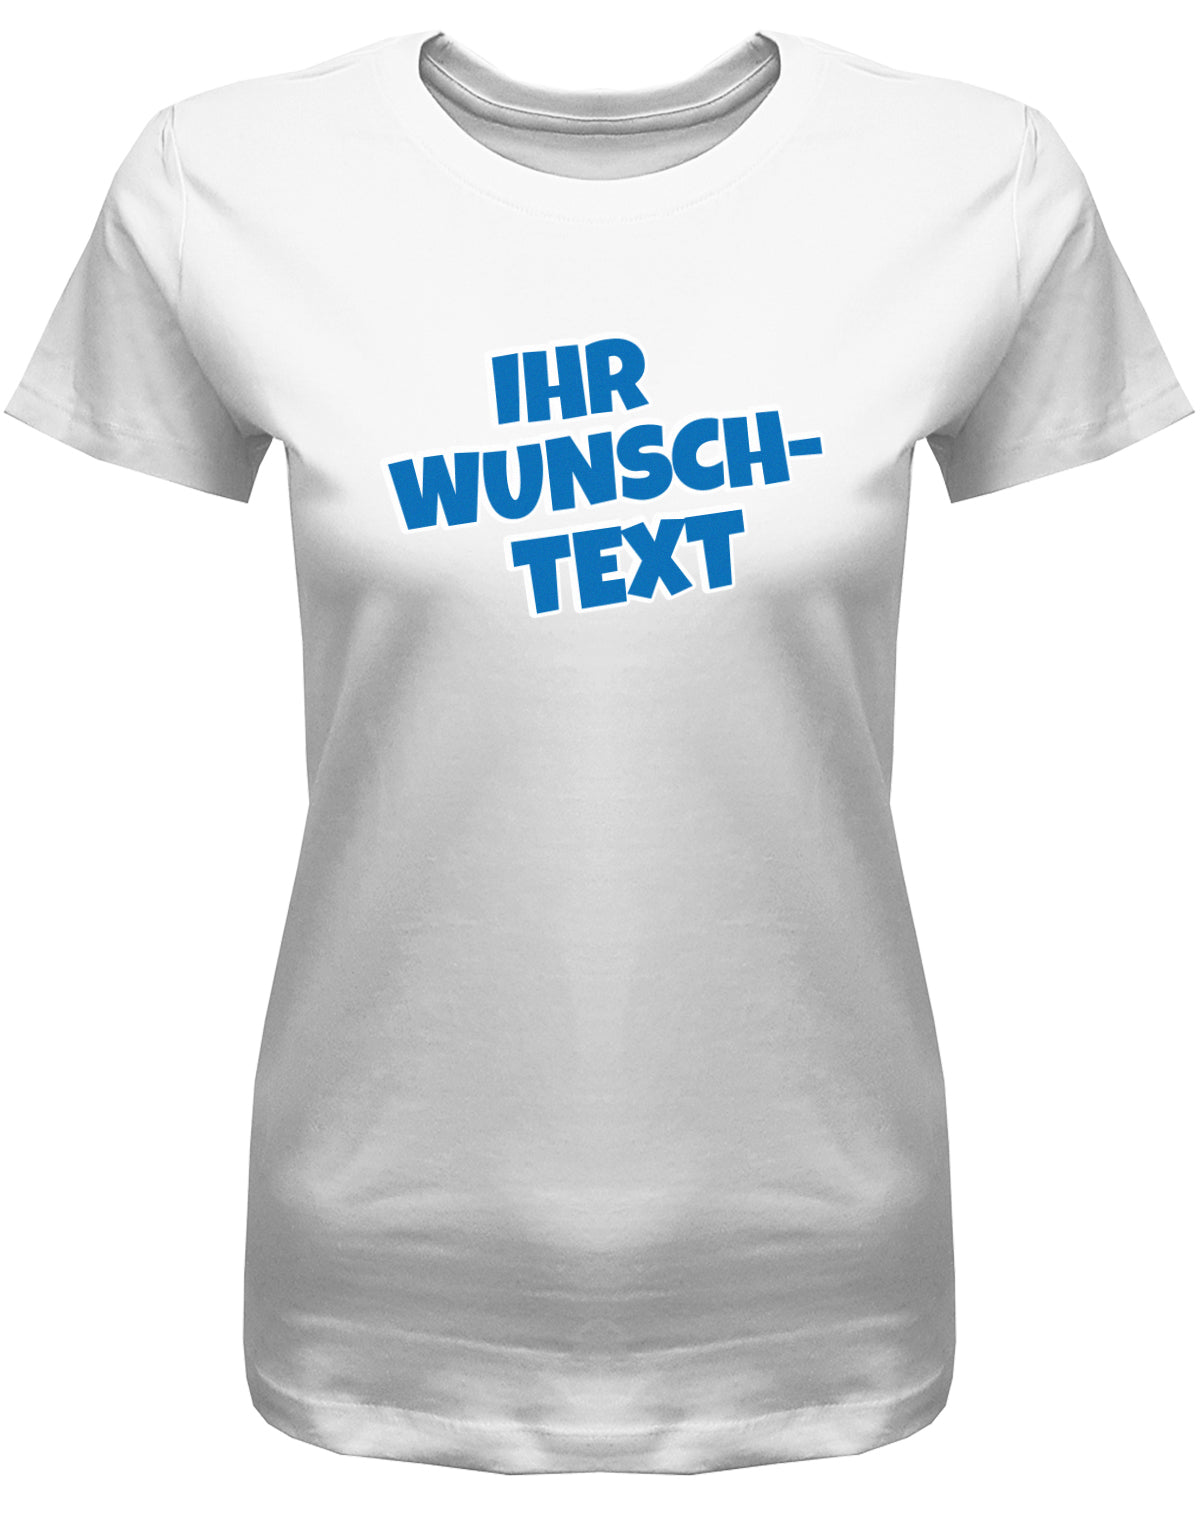 Frauen Tshirt mit Wunschtext.  Comic Schriftart mit weißer Umrandung. Weiss